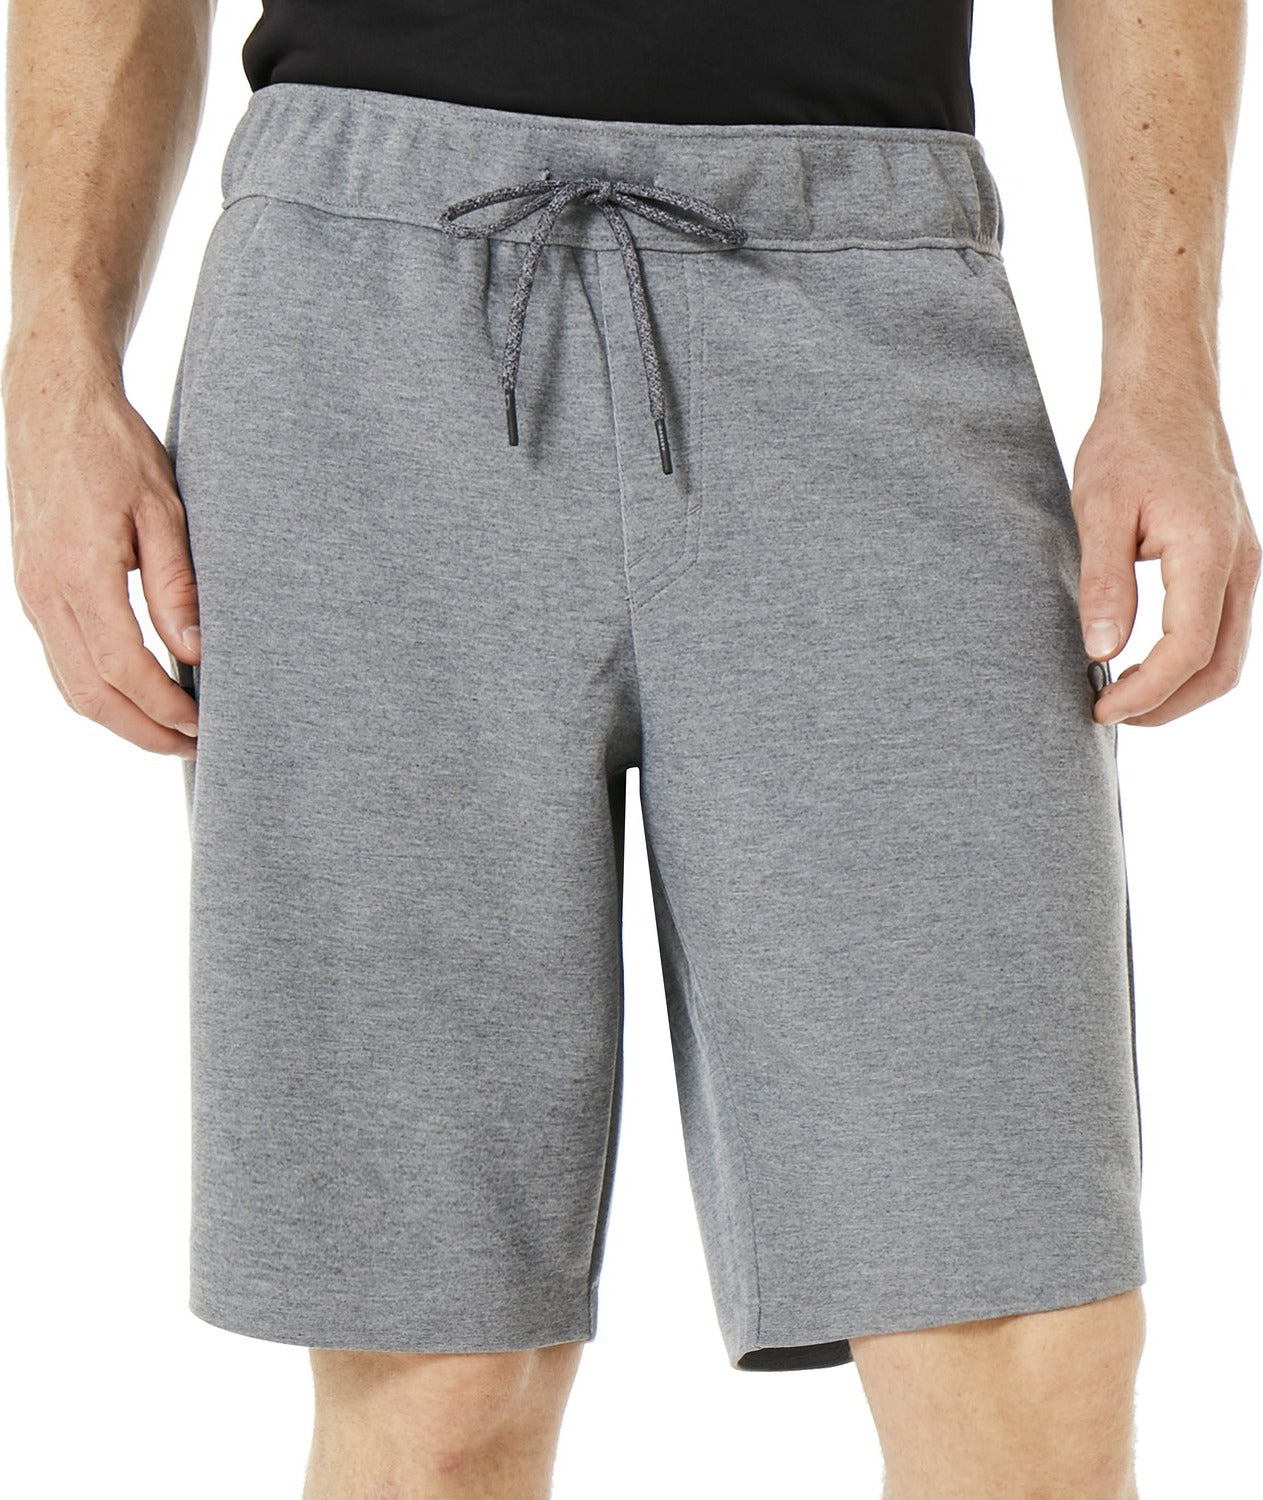 oakley hydrolix shorts